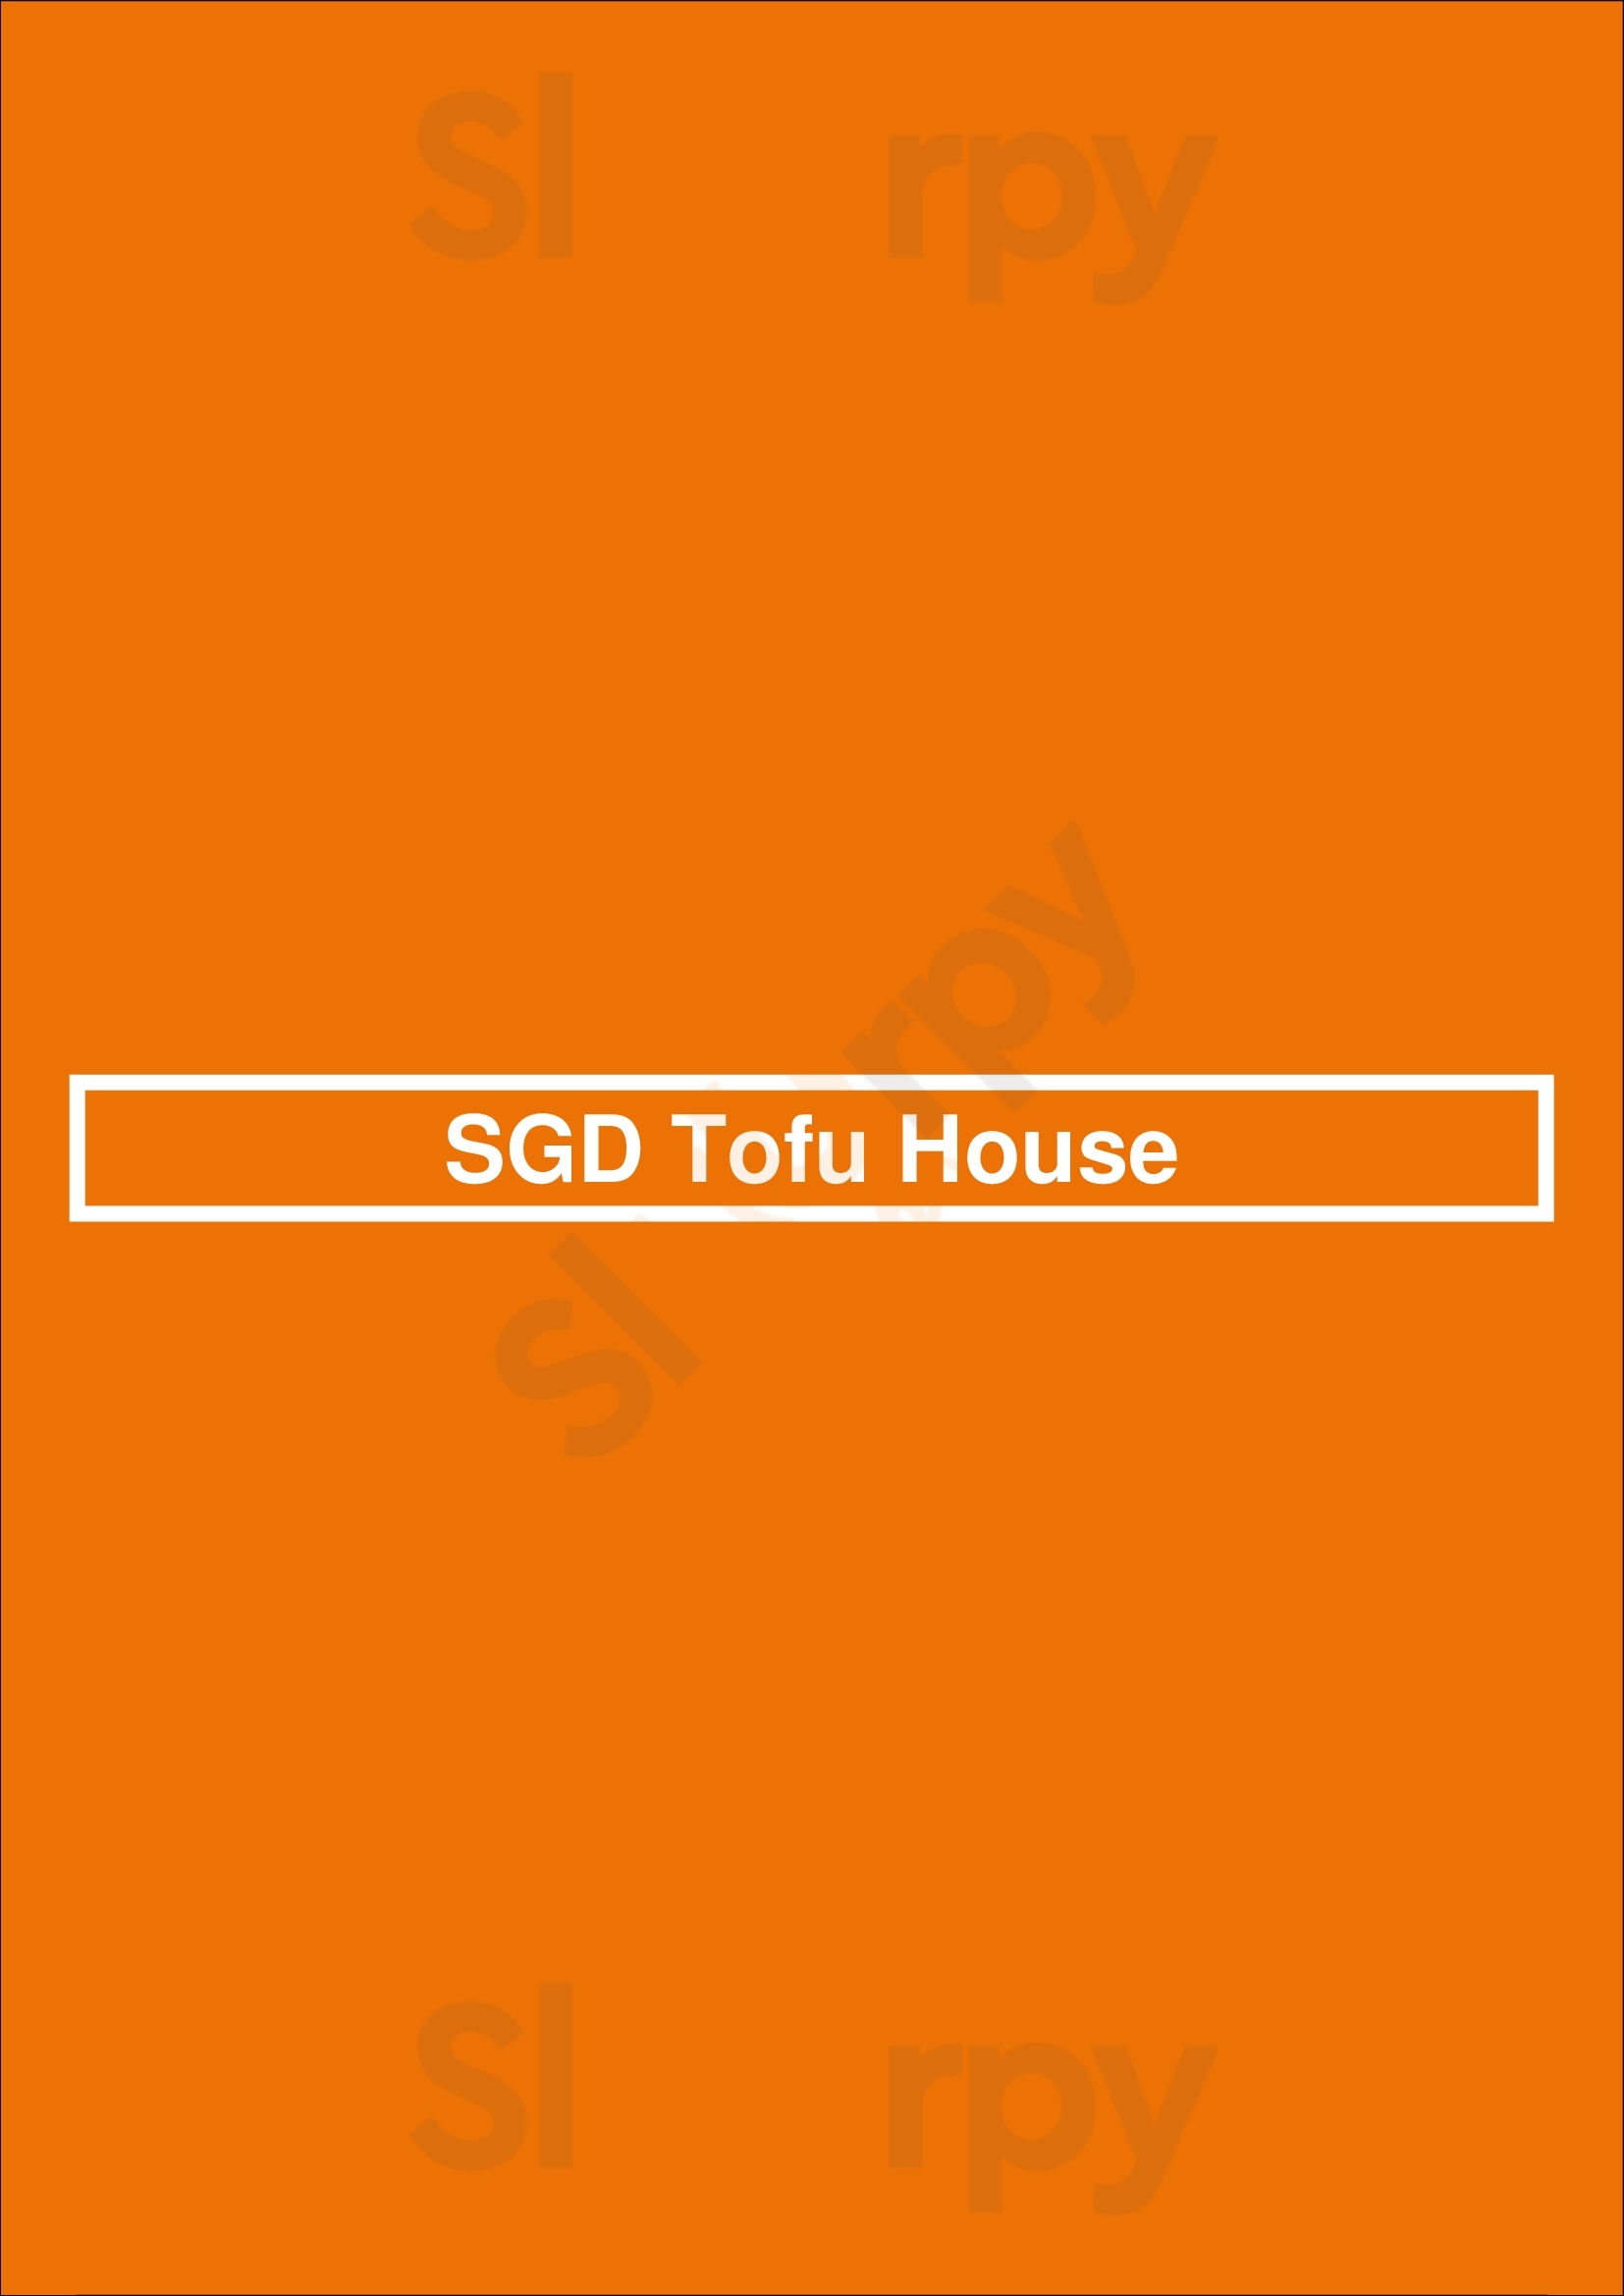 Sgd Tofu House San Jose Menu - 1